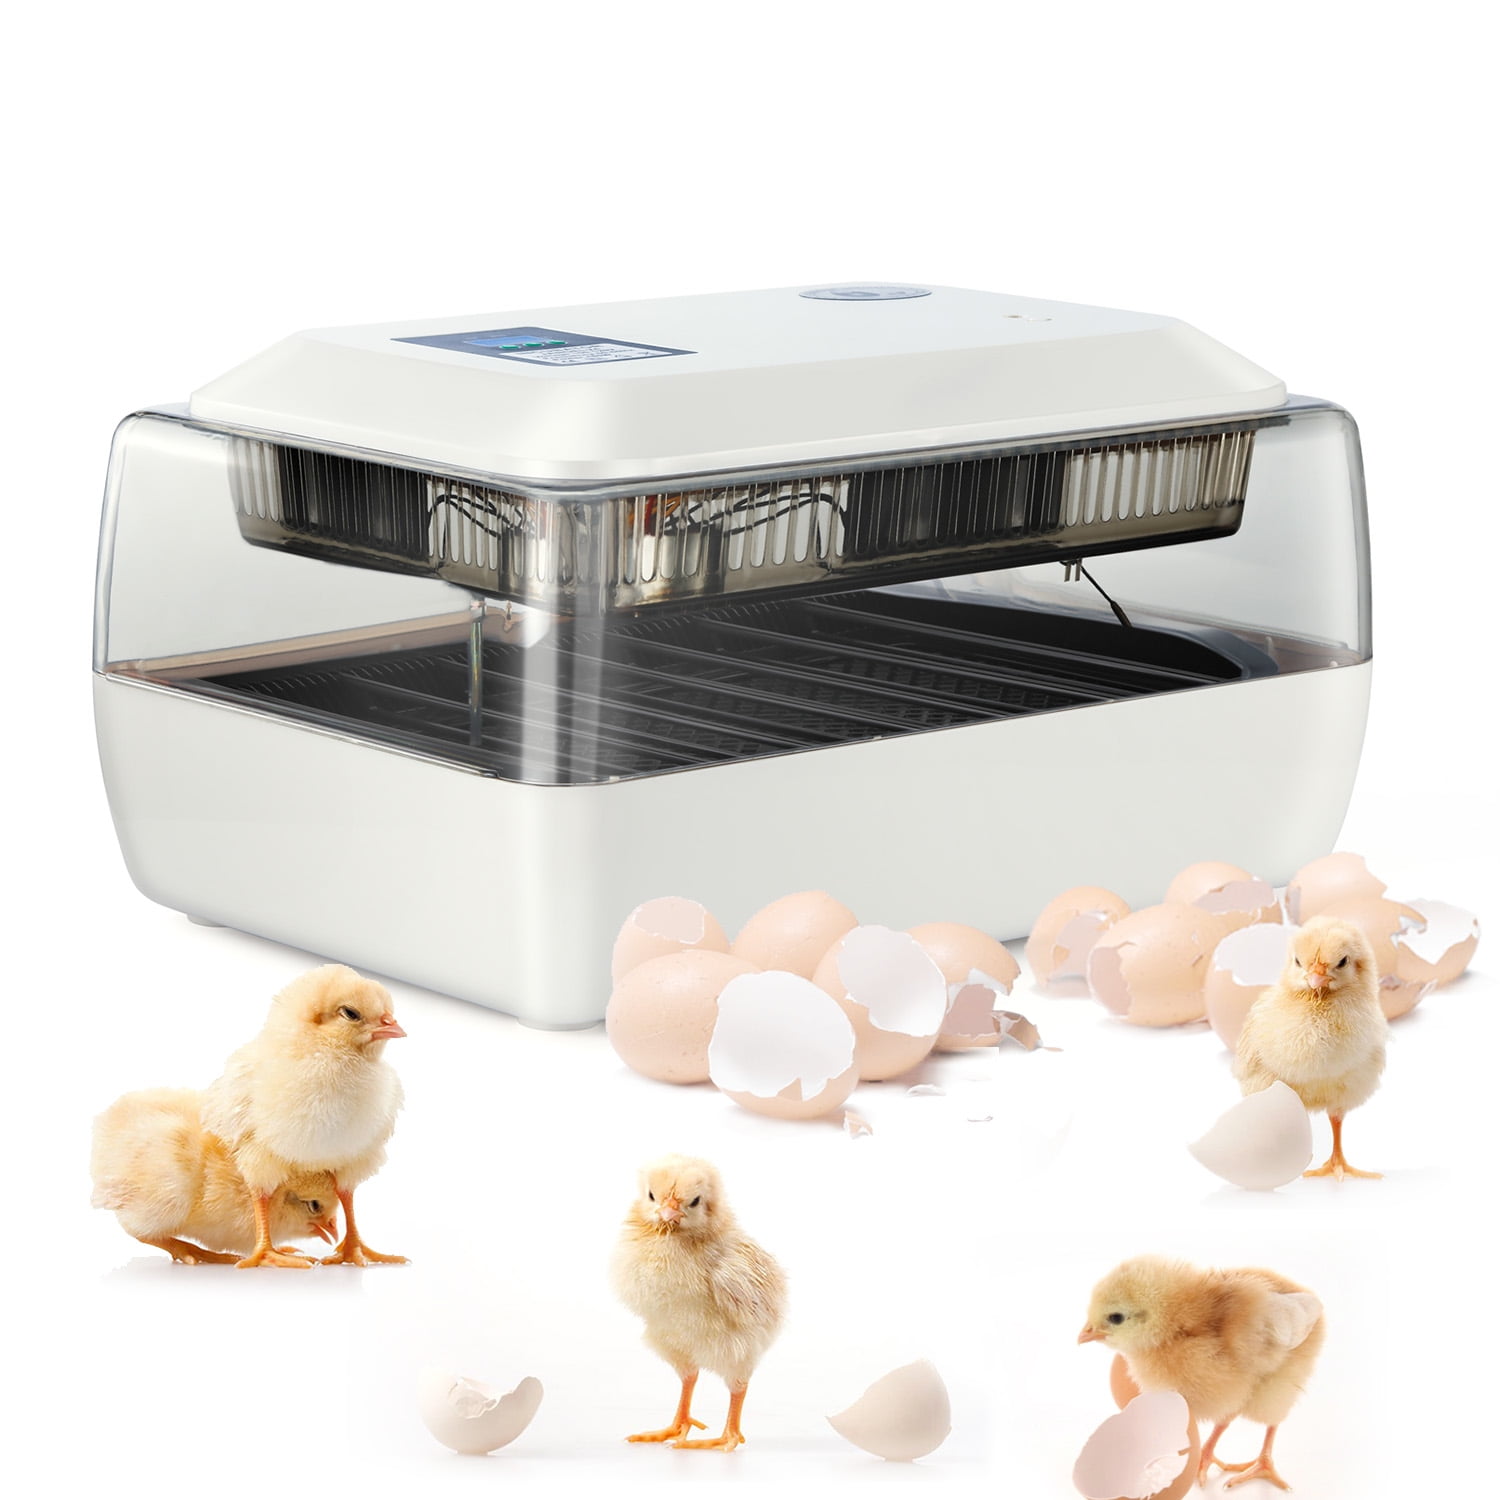 chicken incubator temperature